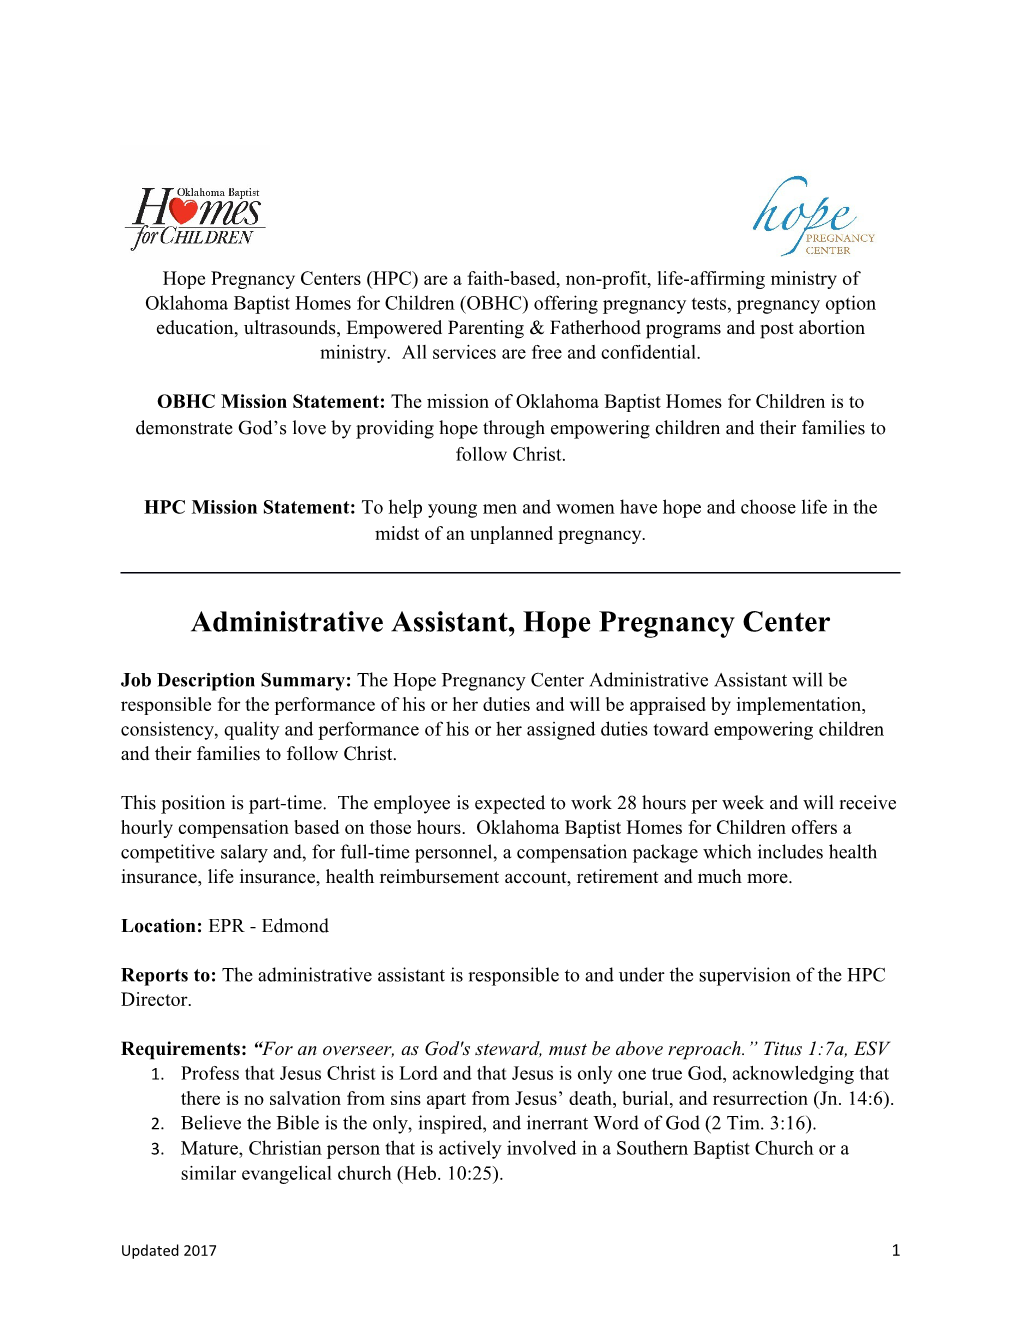 Administrative Assistant, Hope Pregnancy Center